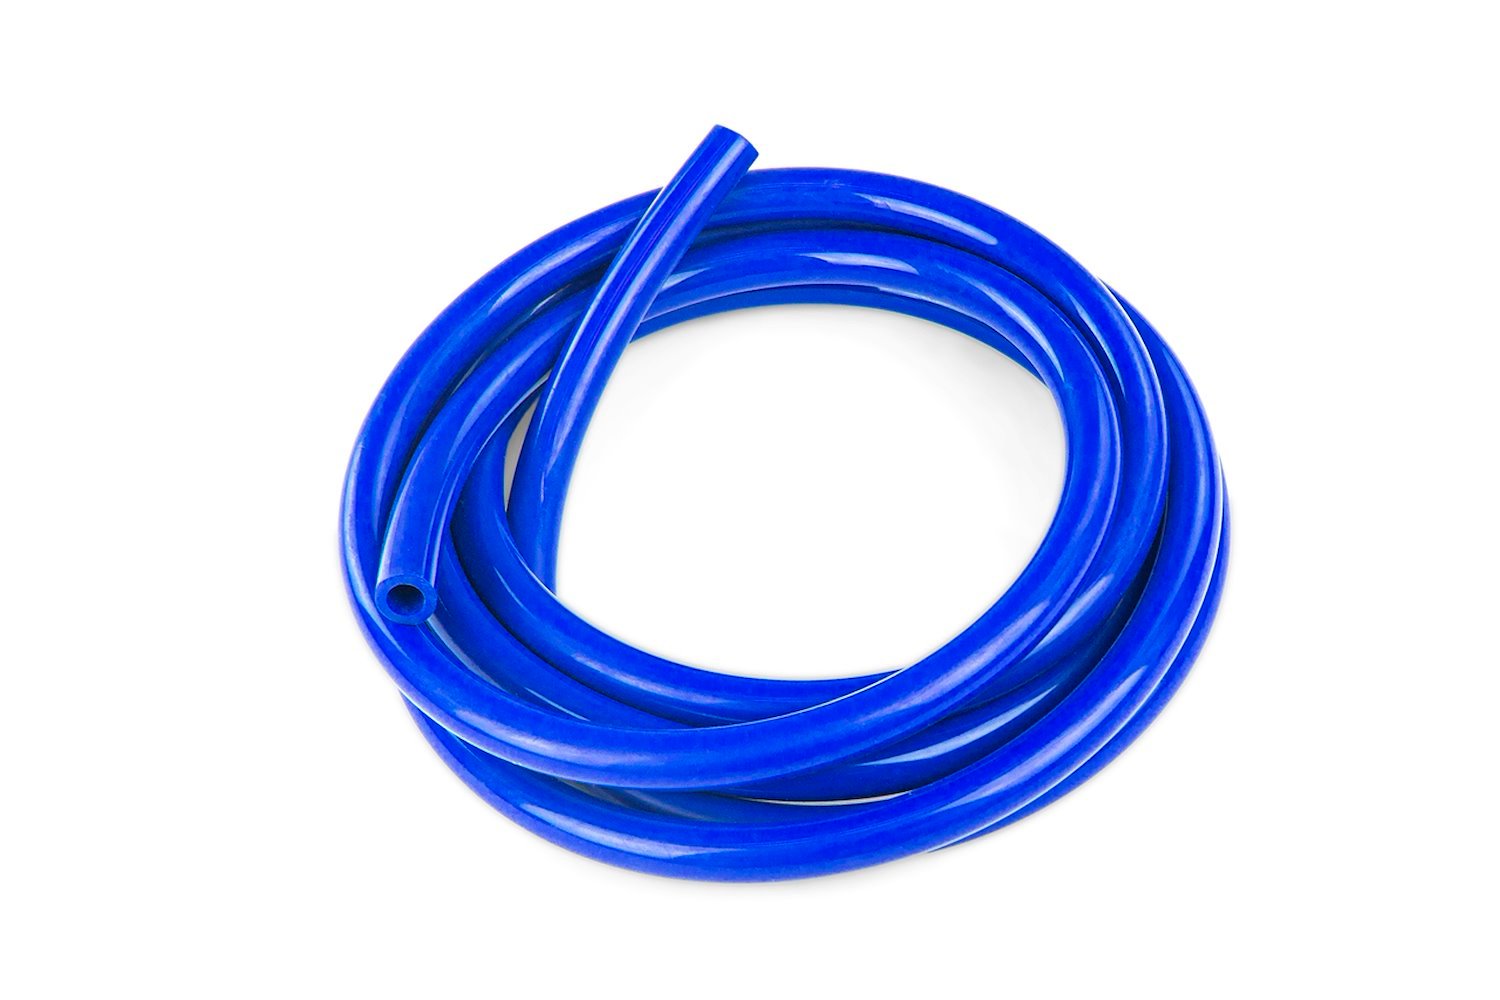 HTSVH35-BLUEx5 High-Temperature Silicone Vacuum Hose Tubing, 3.5 mm ID, 5 ft. Roll, Blue